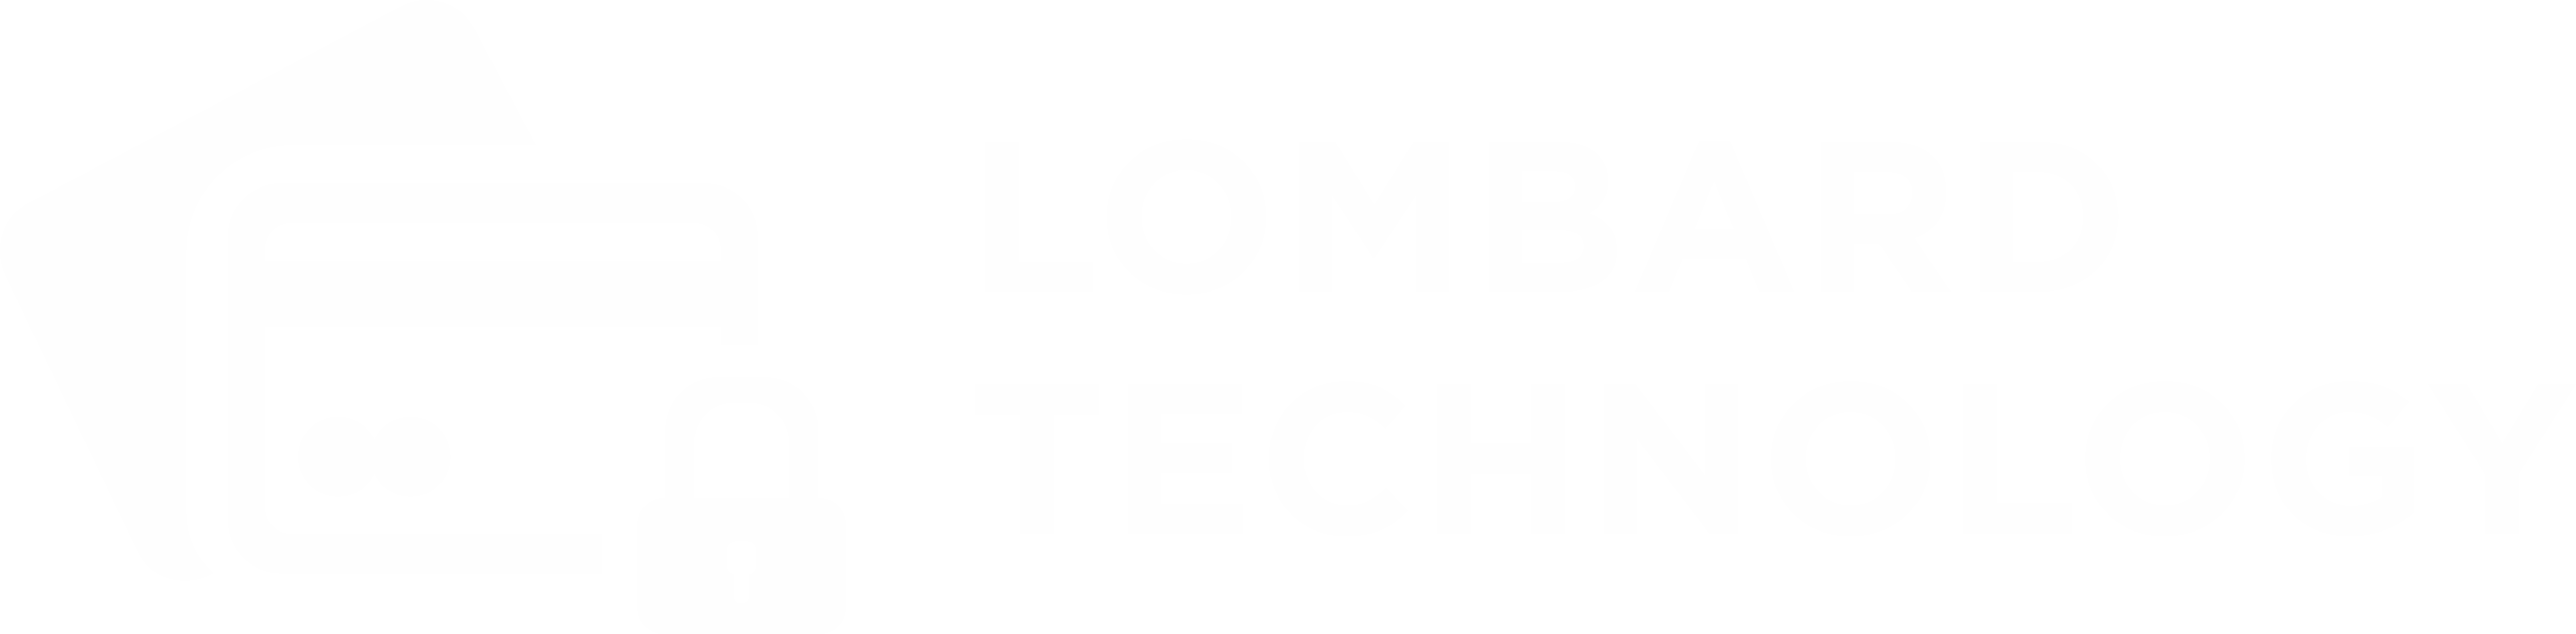 Lombard Technologyh - автоматизация ломбардов